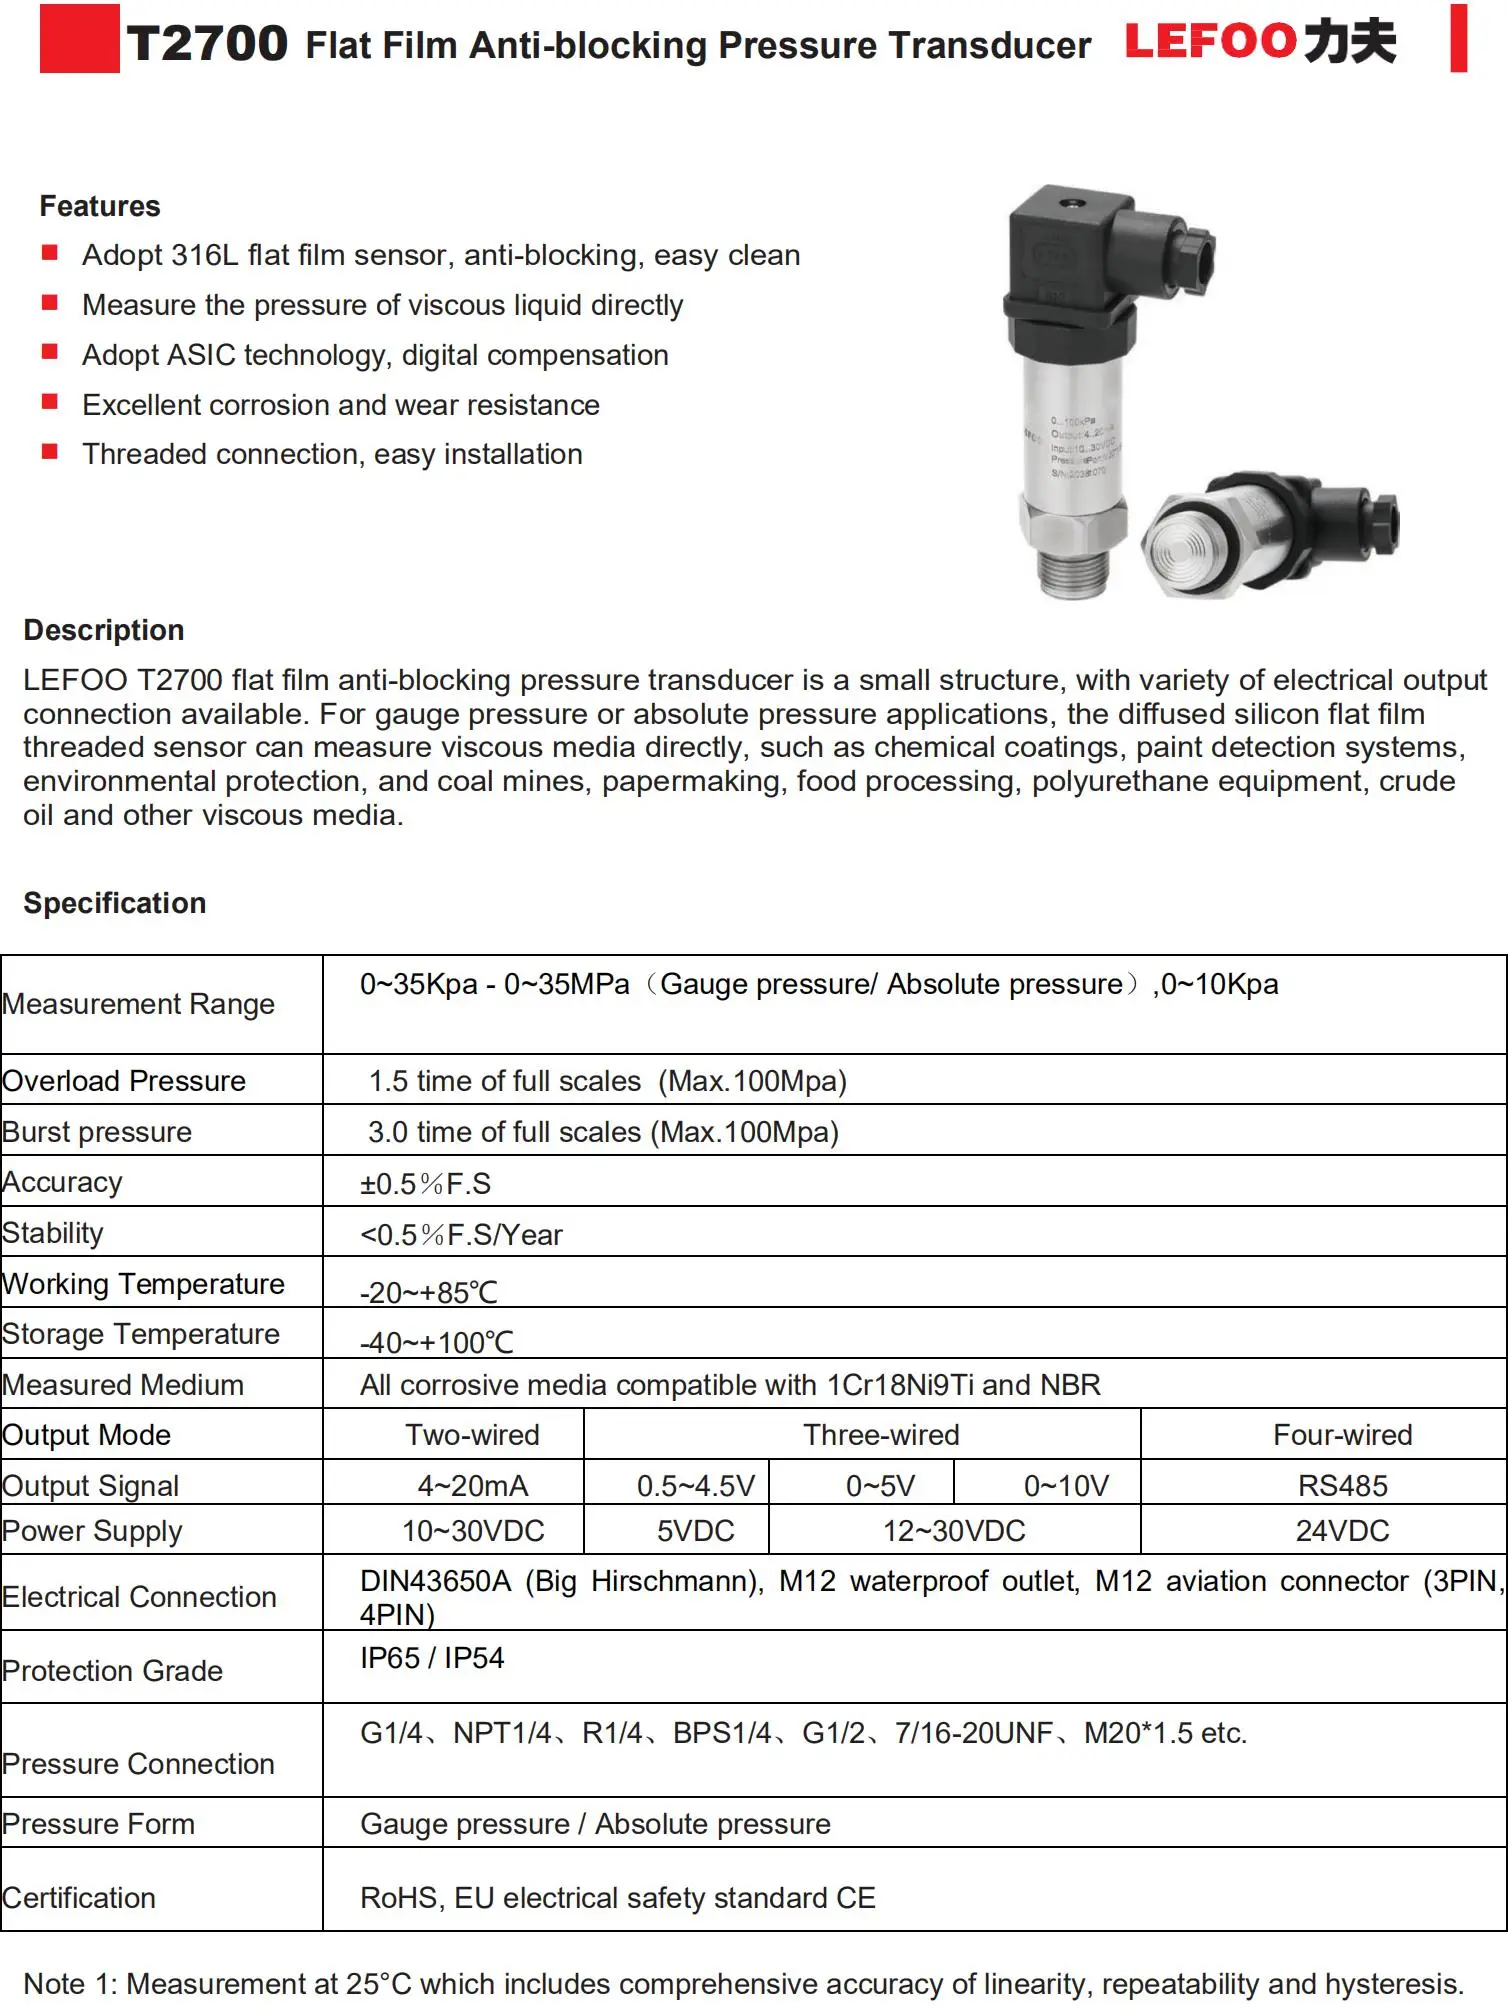 LEFOO LFT2700 Anti-blocking Flush-diaphragm smart Pressure Transmitter hirschmann pressure sensor pressure transducer 4 20ma